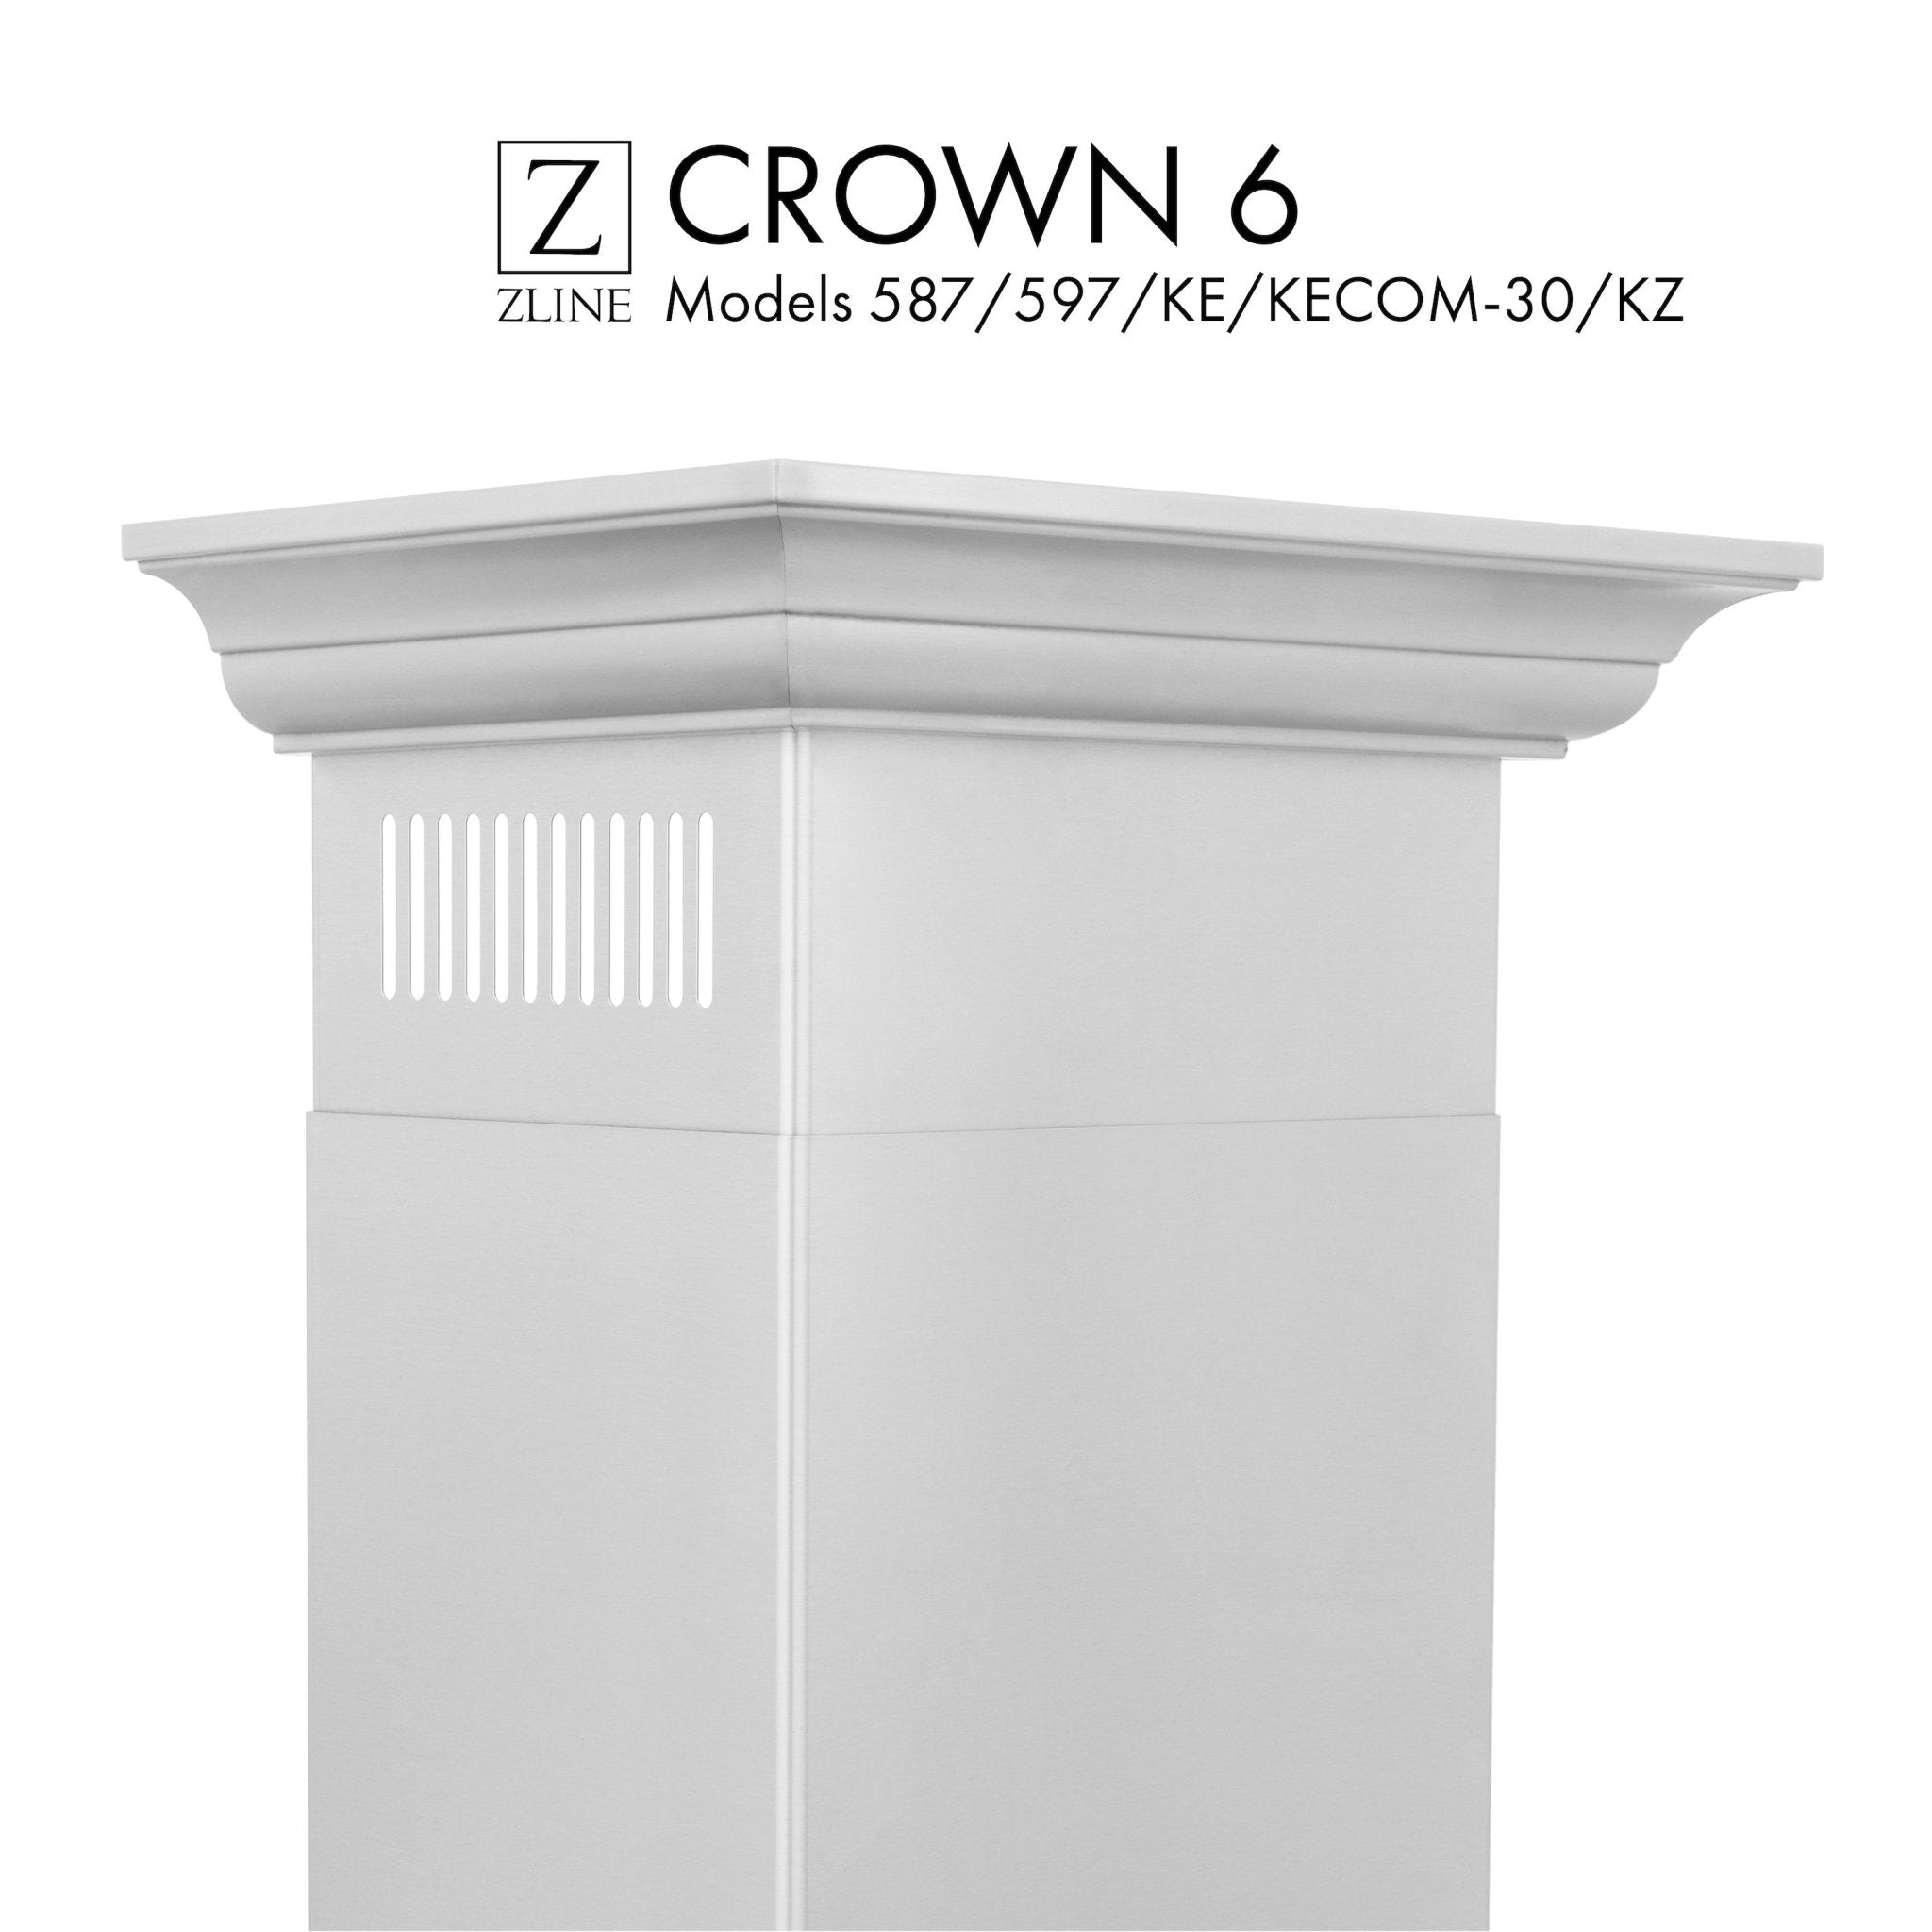 ZLINE Crown Molding 6 For 587/597/KE/KECOM-30/KZ Wall Range Hood Stainless Steel (CM6-587/597/KE/KECOM-30/KZ) - Rustic Kitchen & Bath - Range Hood Accessories - ZLINE Kitchen and Bath